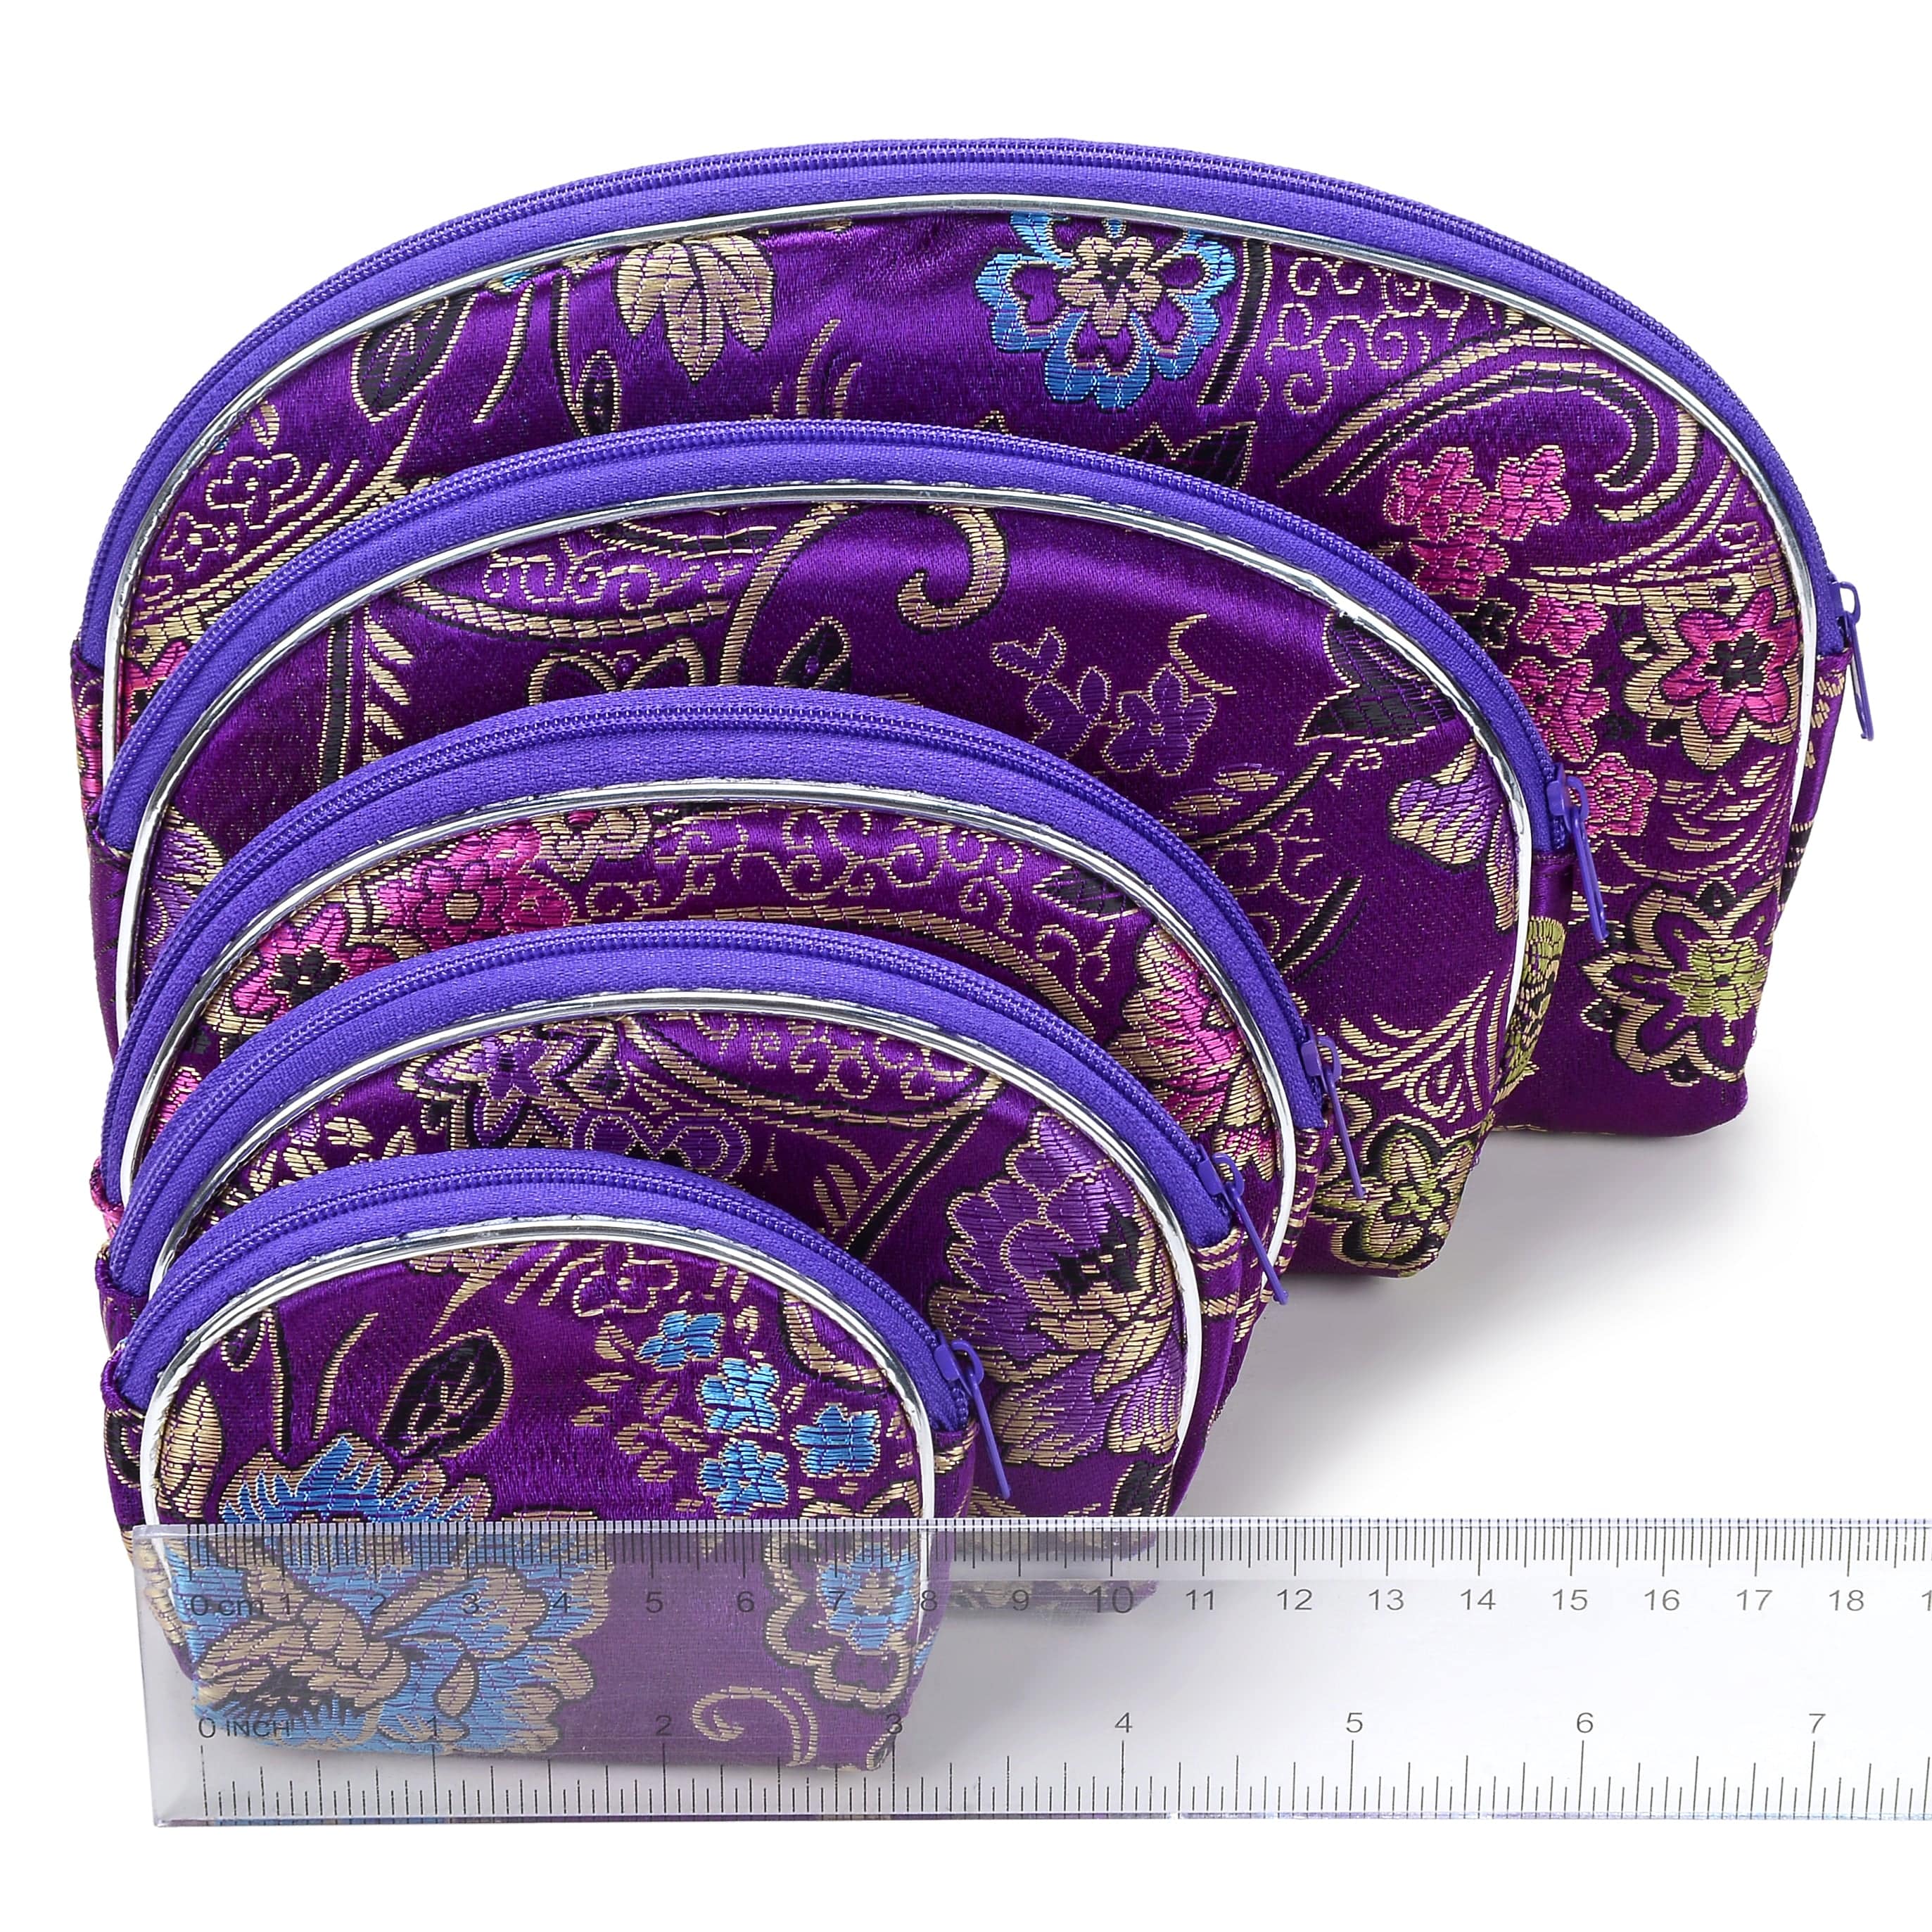 Kalifano JEWELRY POUCHES Purple Silk Pouch - 5 piece set POUCH5-VT